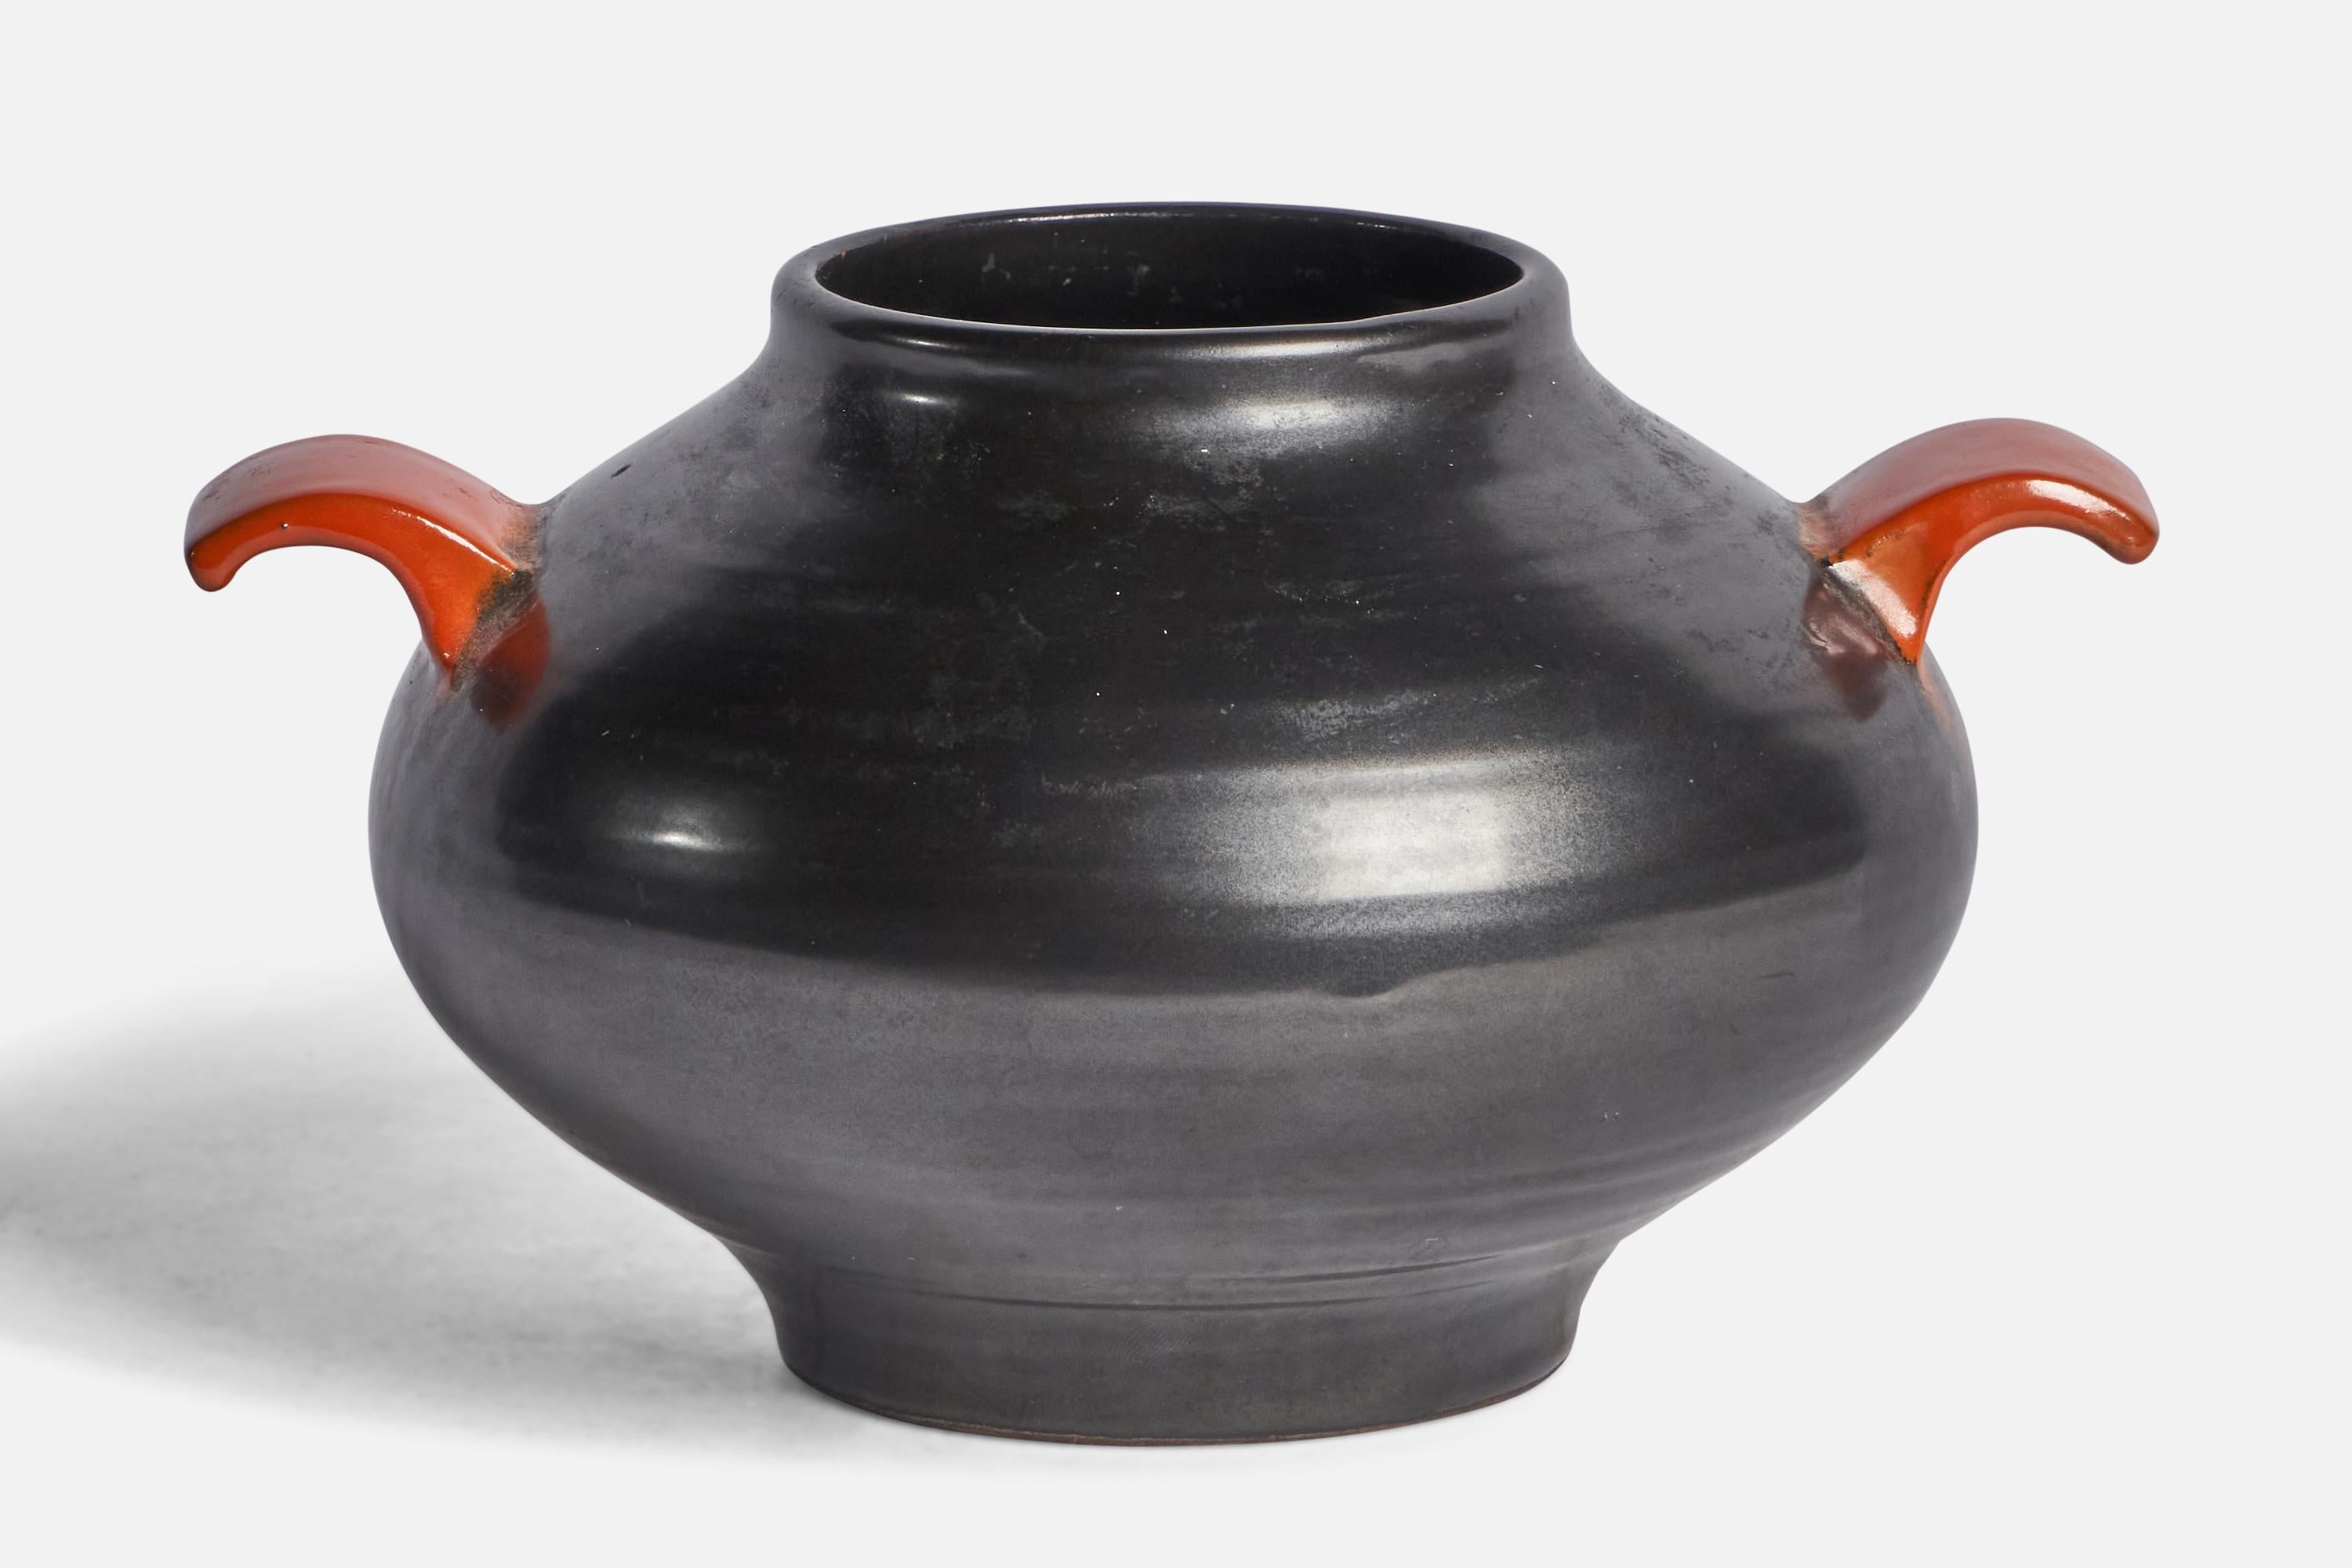 A black and orange-glazed earthenware vase designed and produced by Upsala Ekeby, Sweden, 1930s.